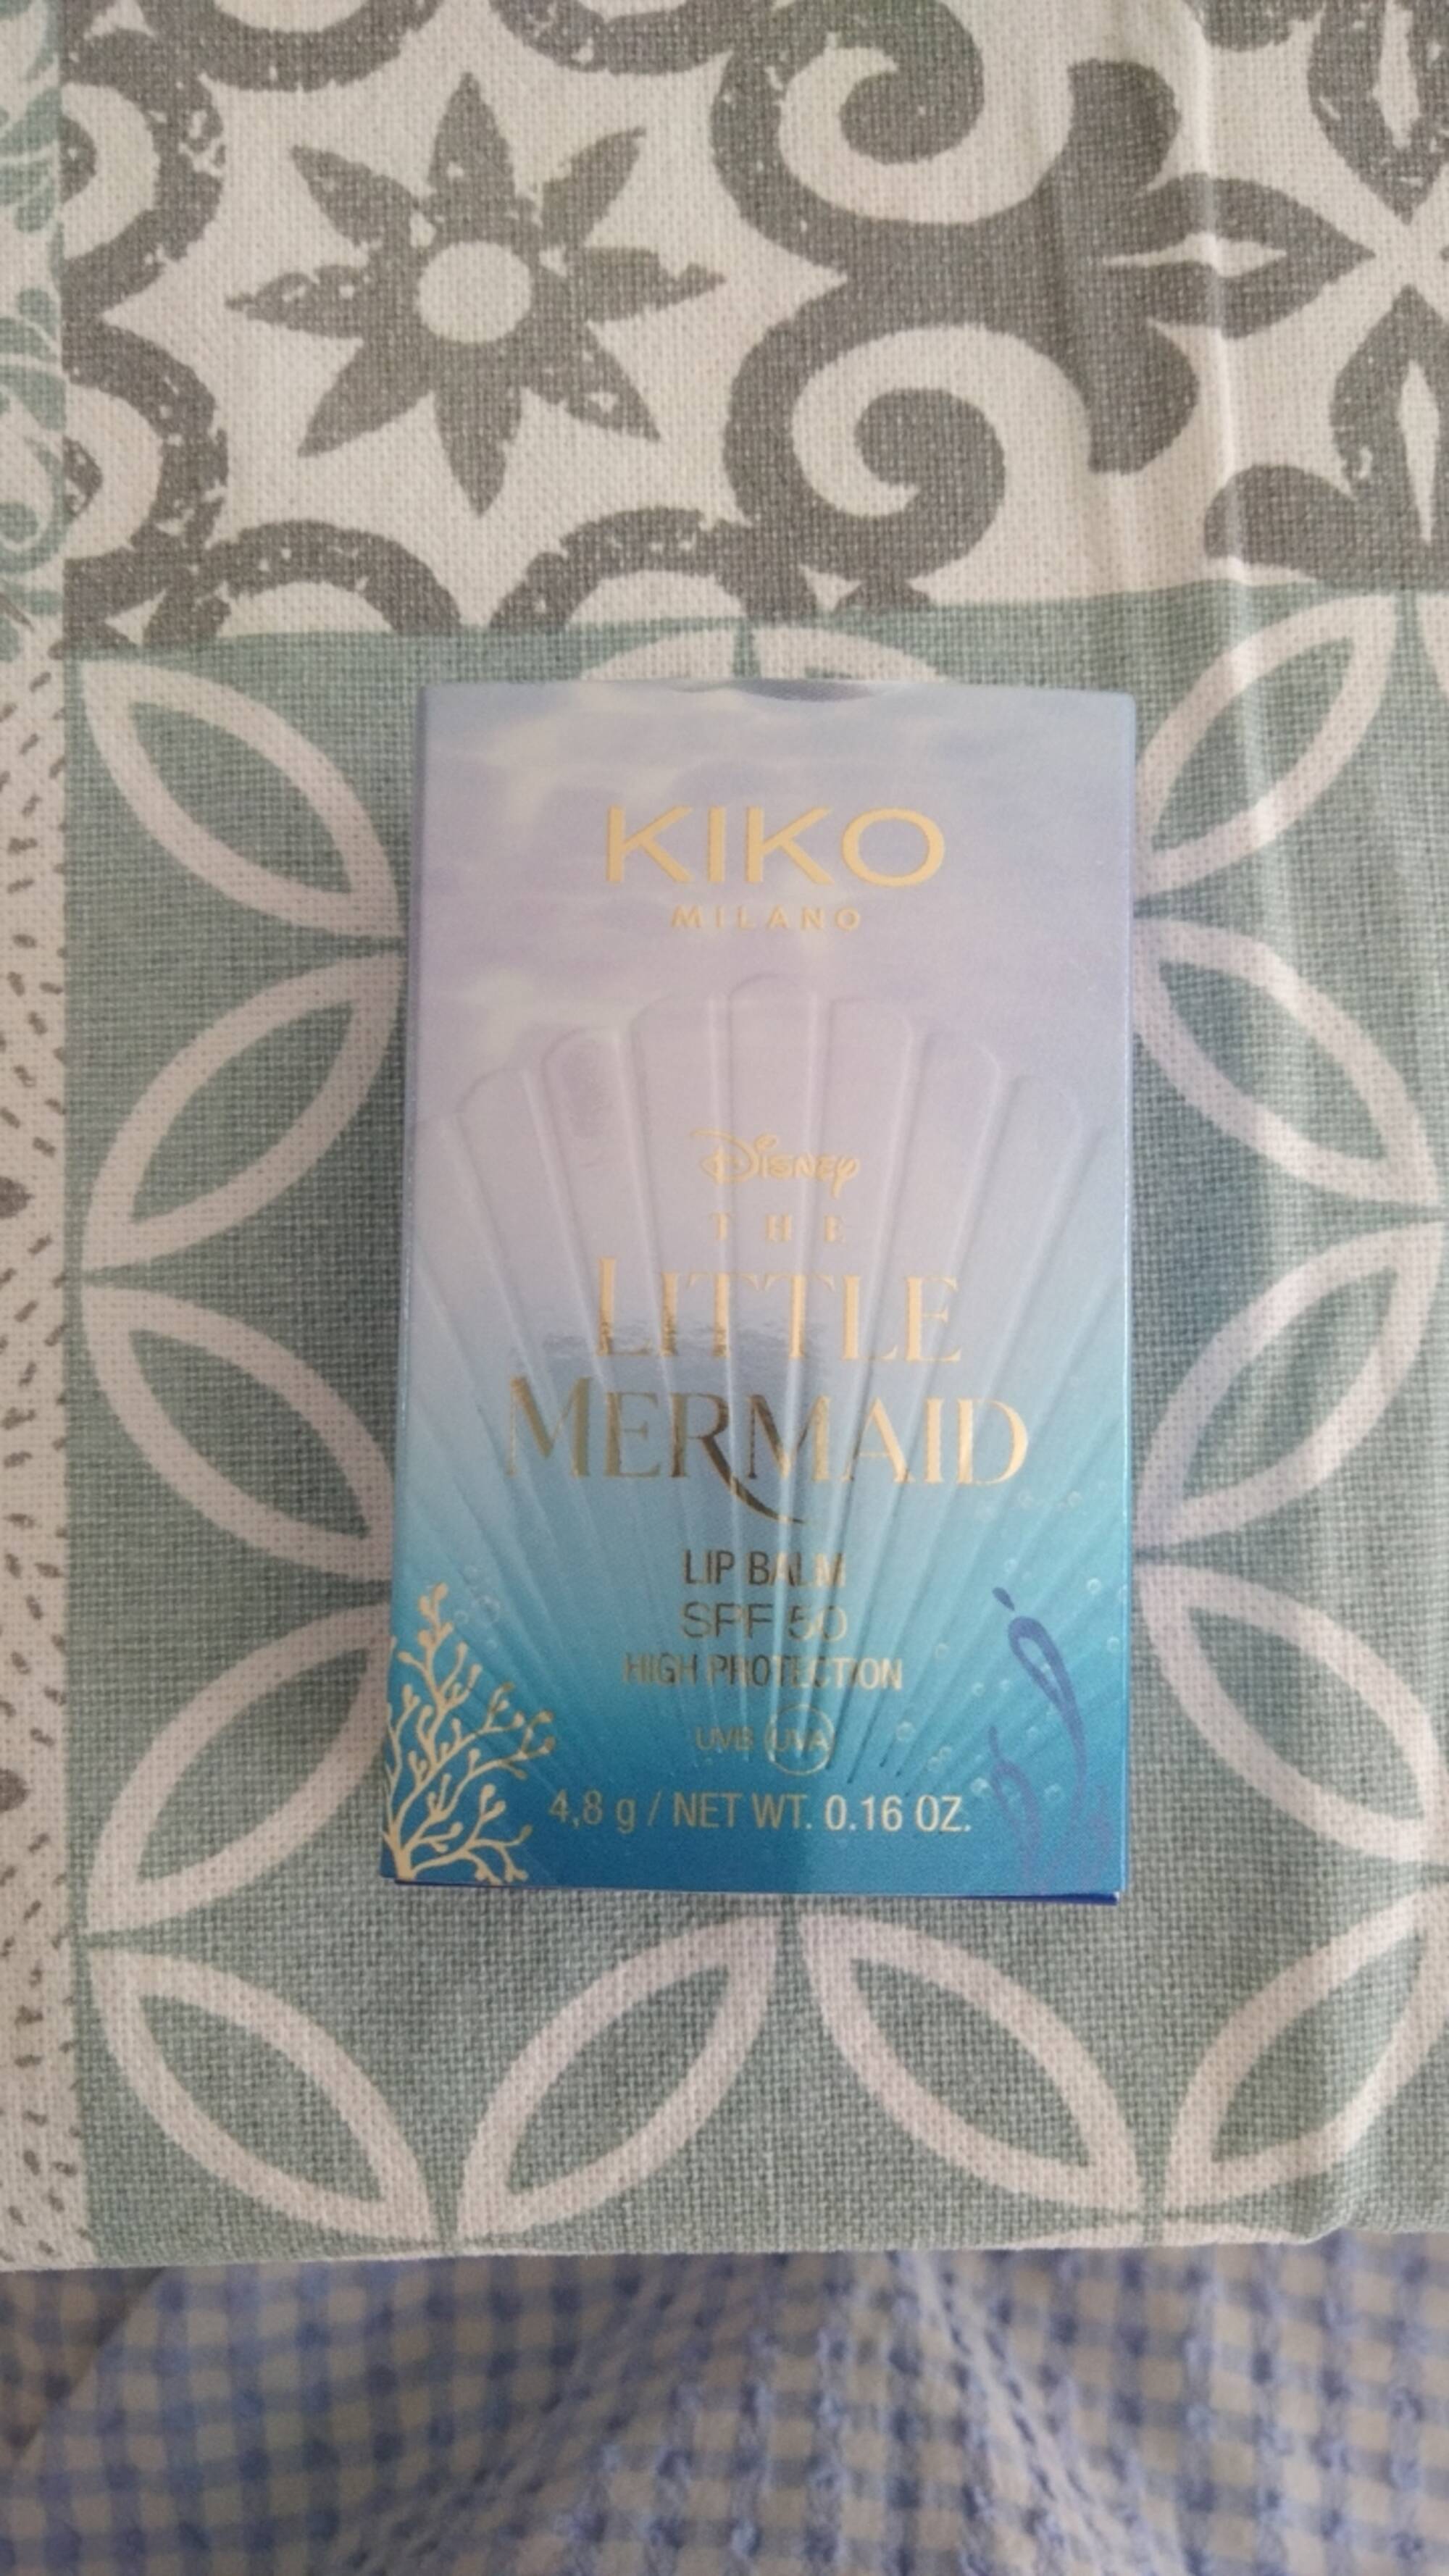 KIKO - Little mermaid - Lip balm SPF 50